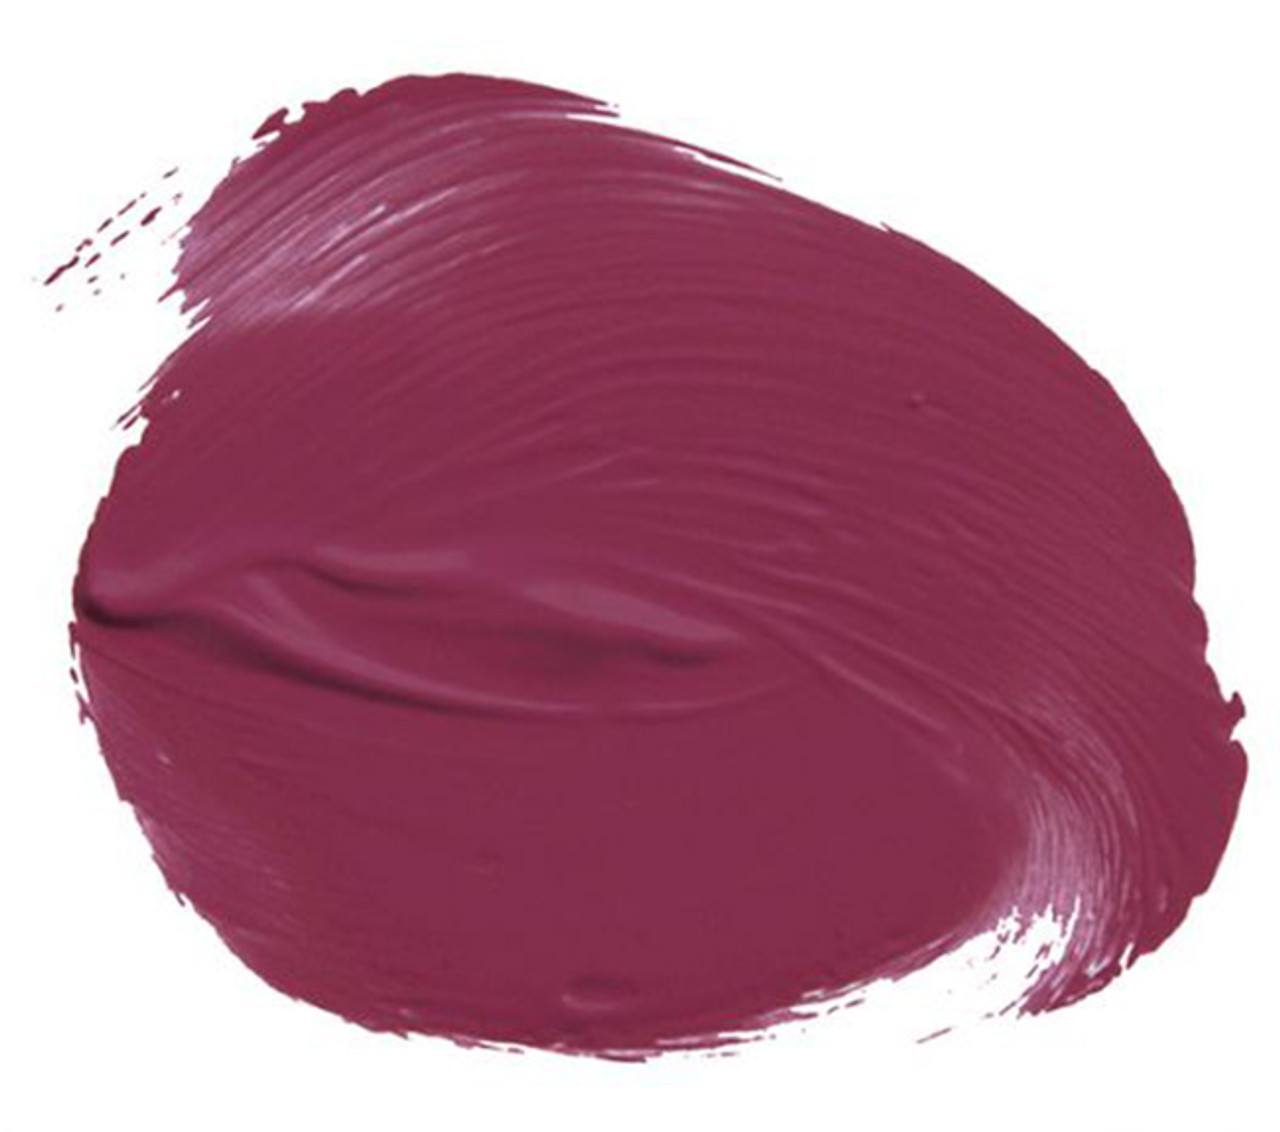 Ardell Beauty Matte Whipped Lipstick Deep Marks - 0.17 oz / 5 g